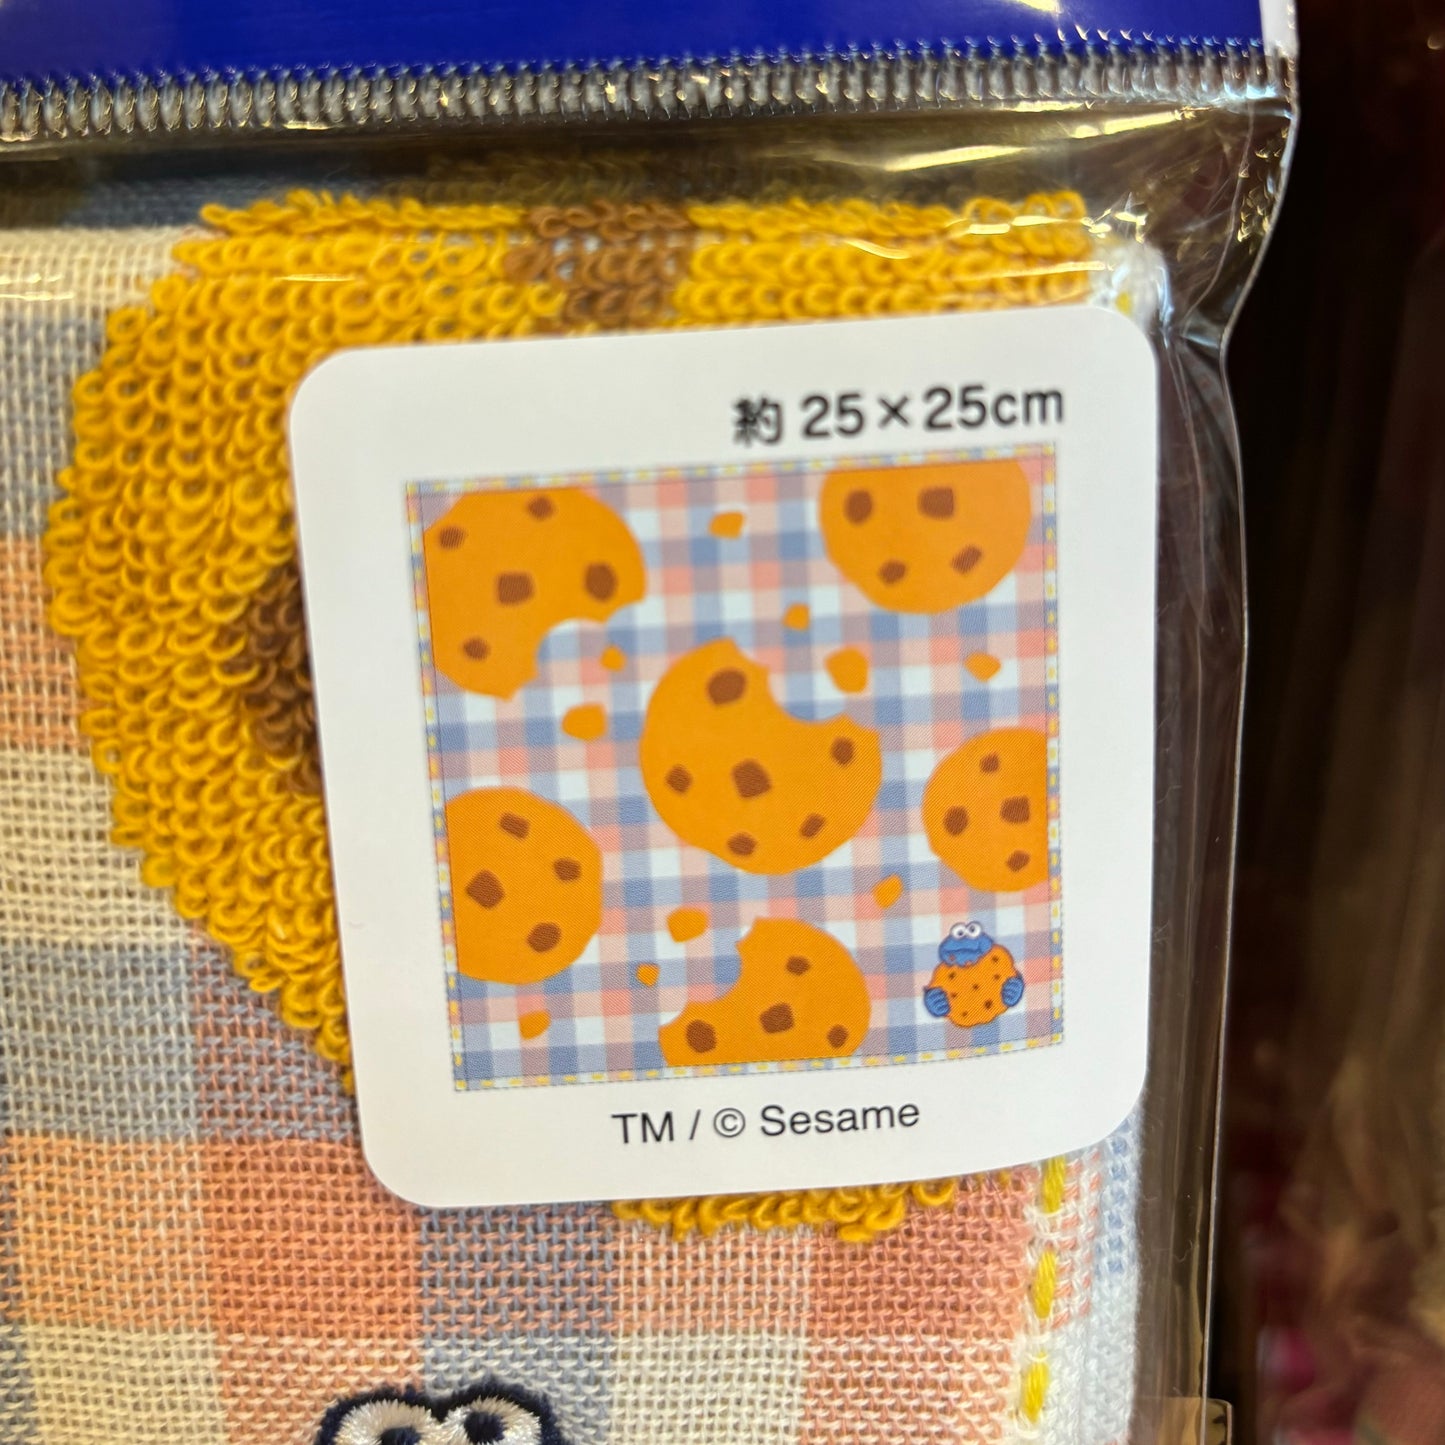 [Order] USJ Sesame Street Cookie Monster Mini Towel